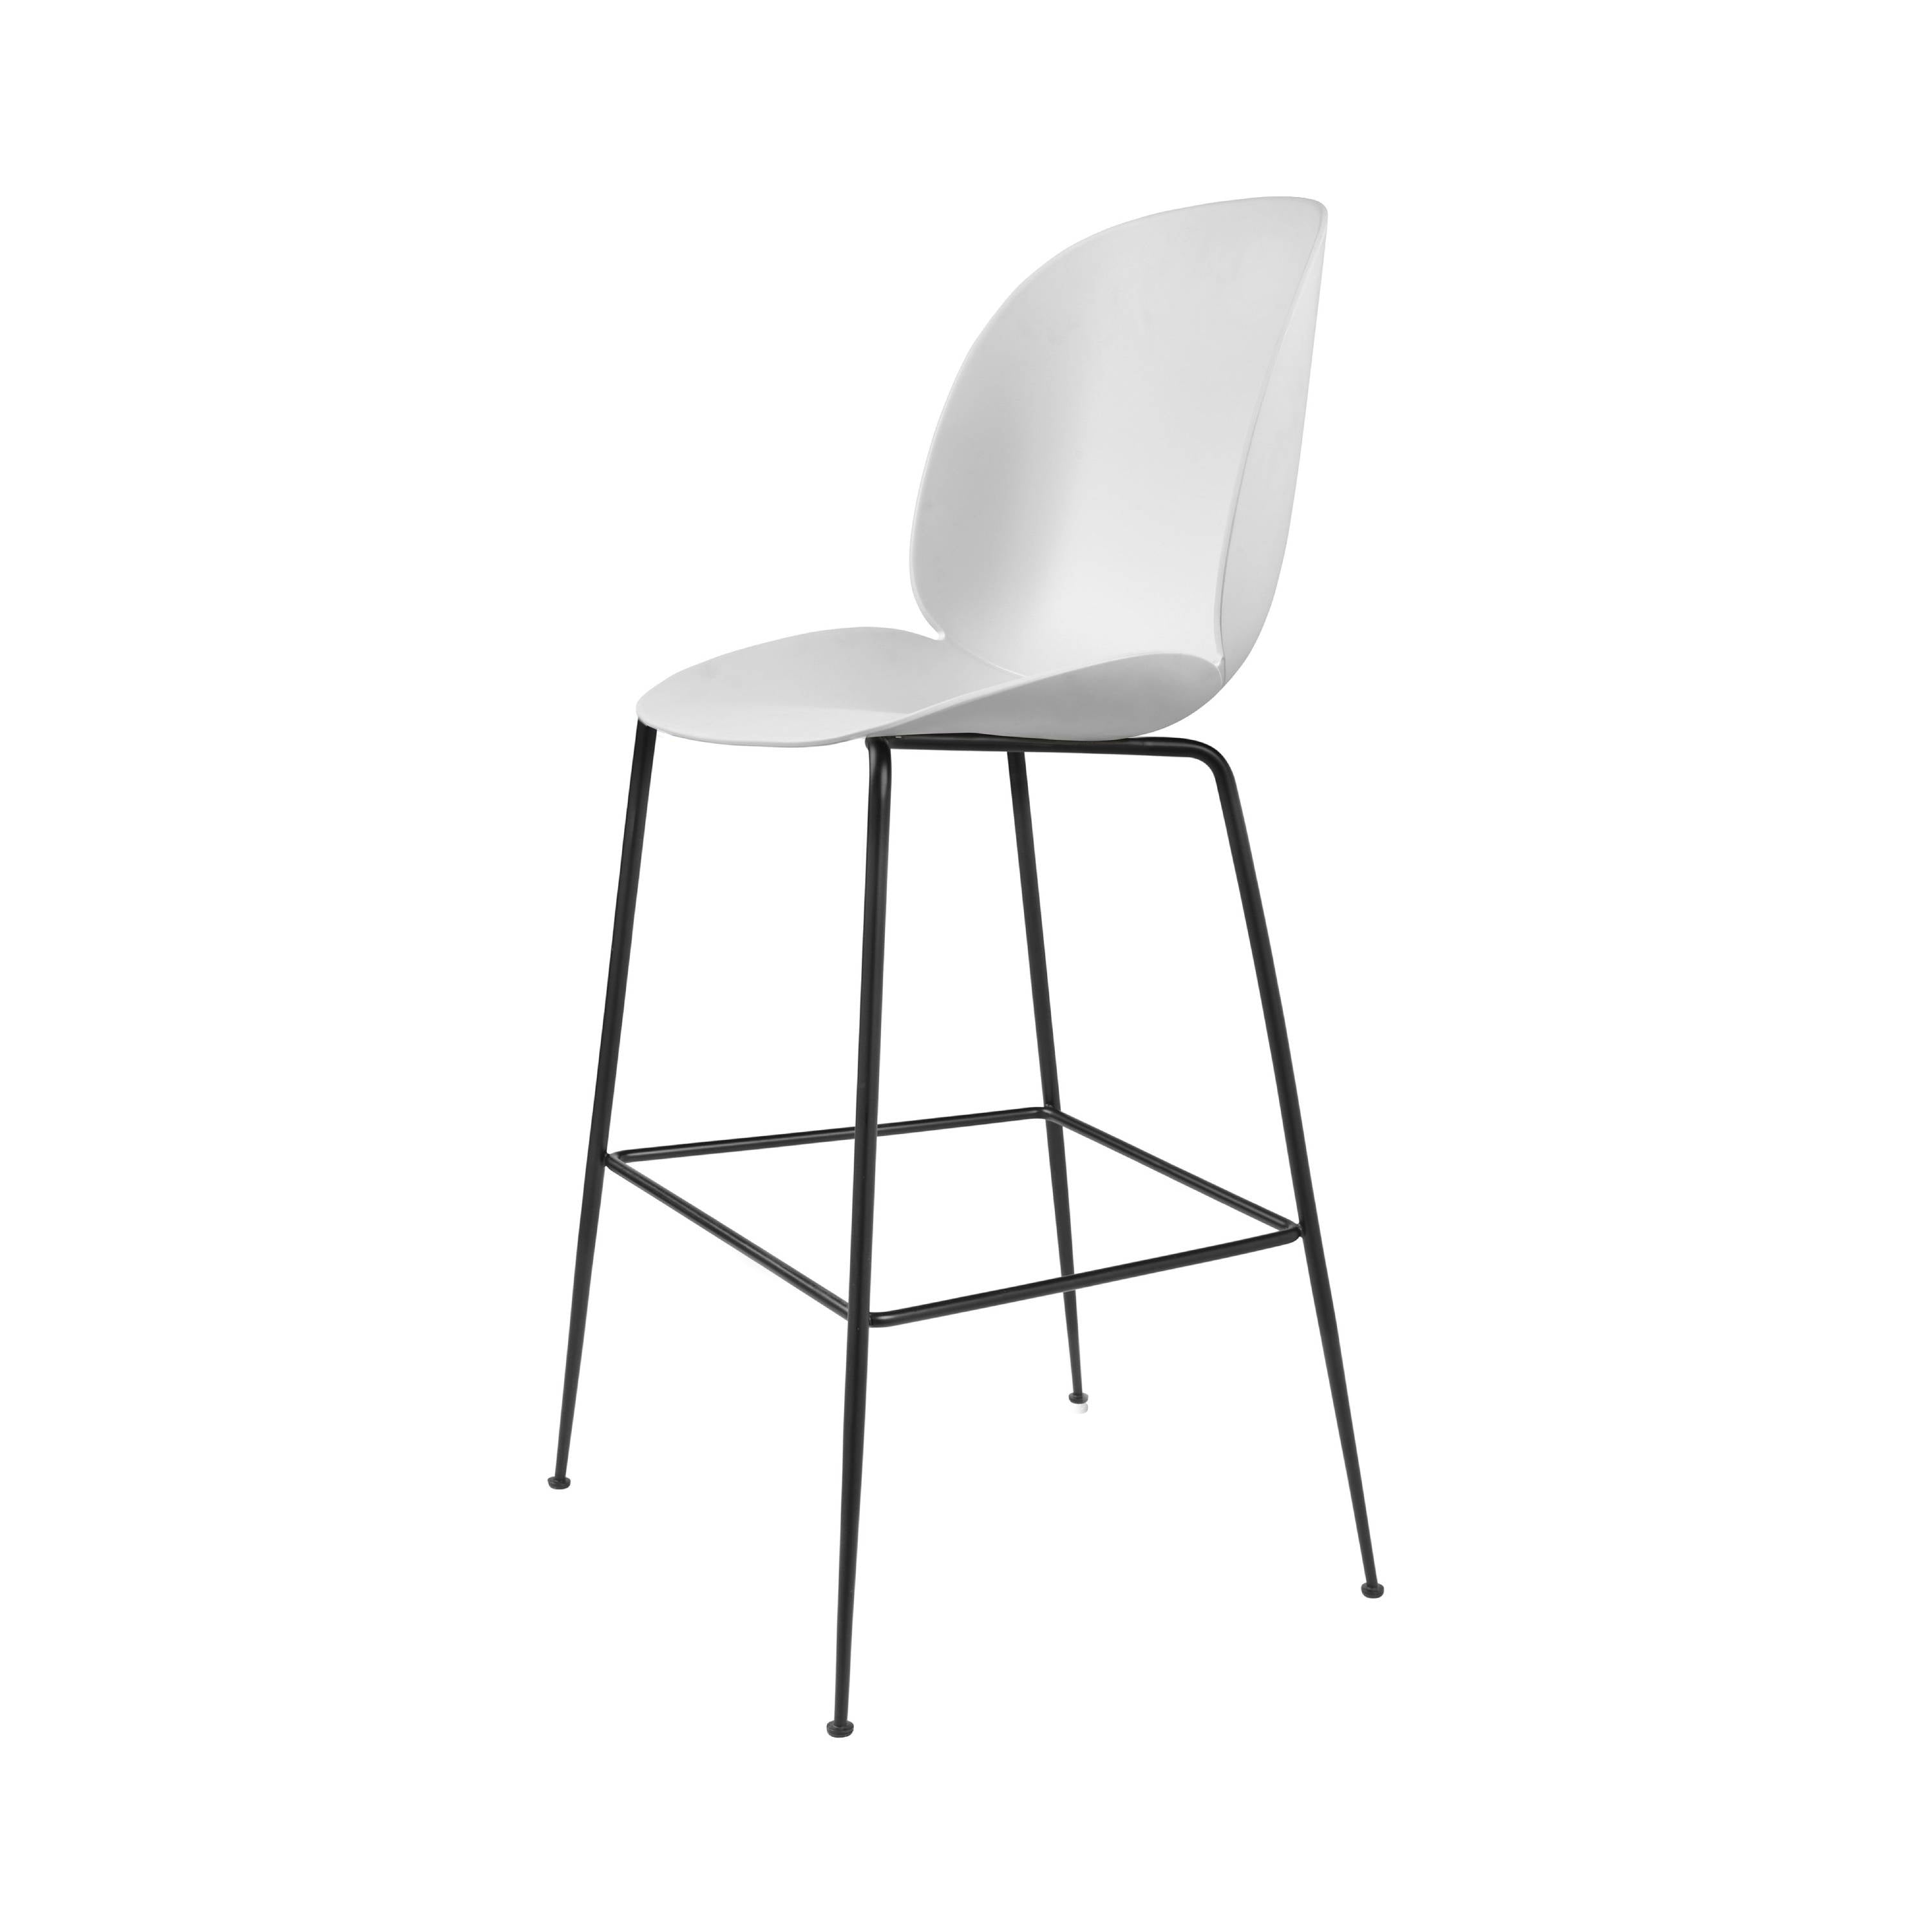 Beetle Bar + Counter Chair: Bar + Alabaster White + Black Matt